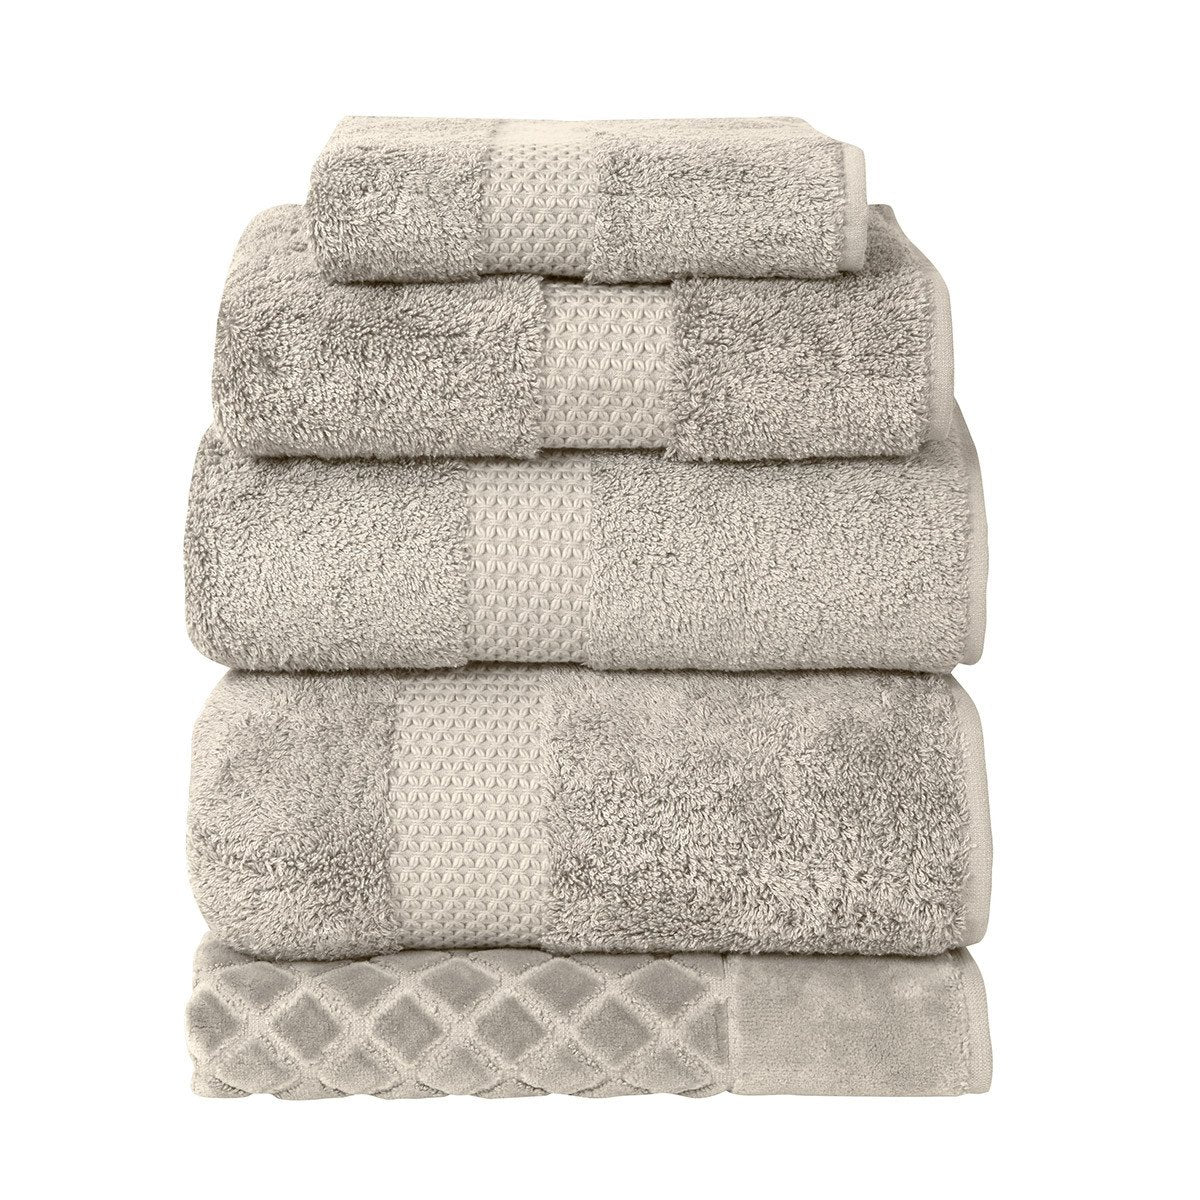 Etoile Pierre Bath Collection by Yves Delorme | Fig Linens, beige bath linens, towels